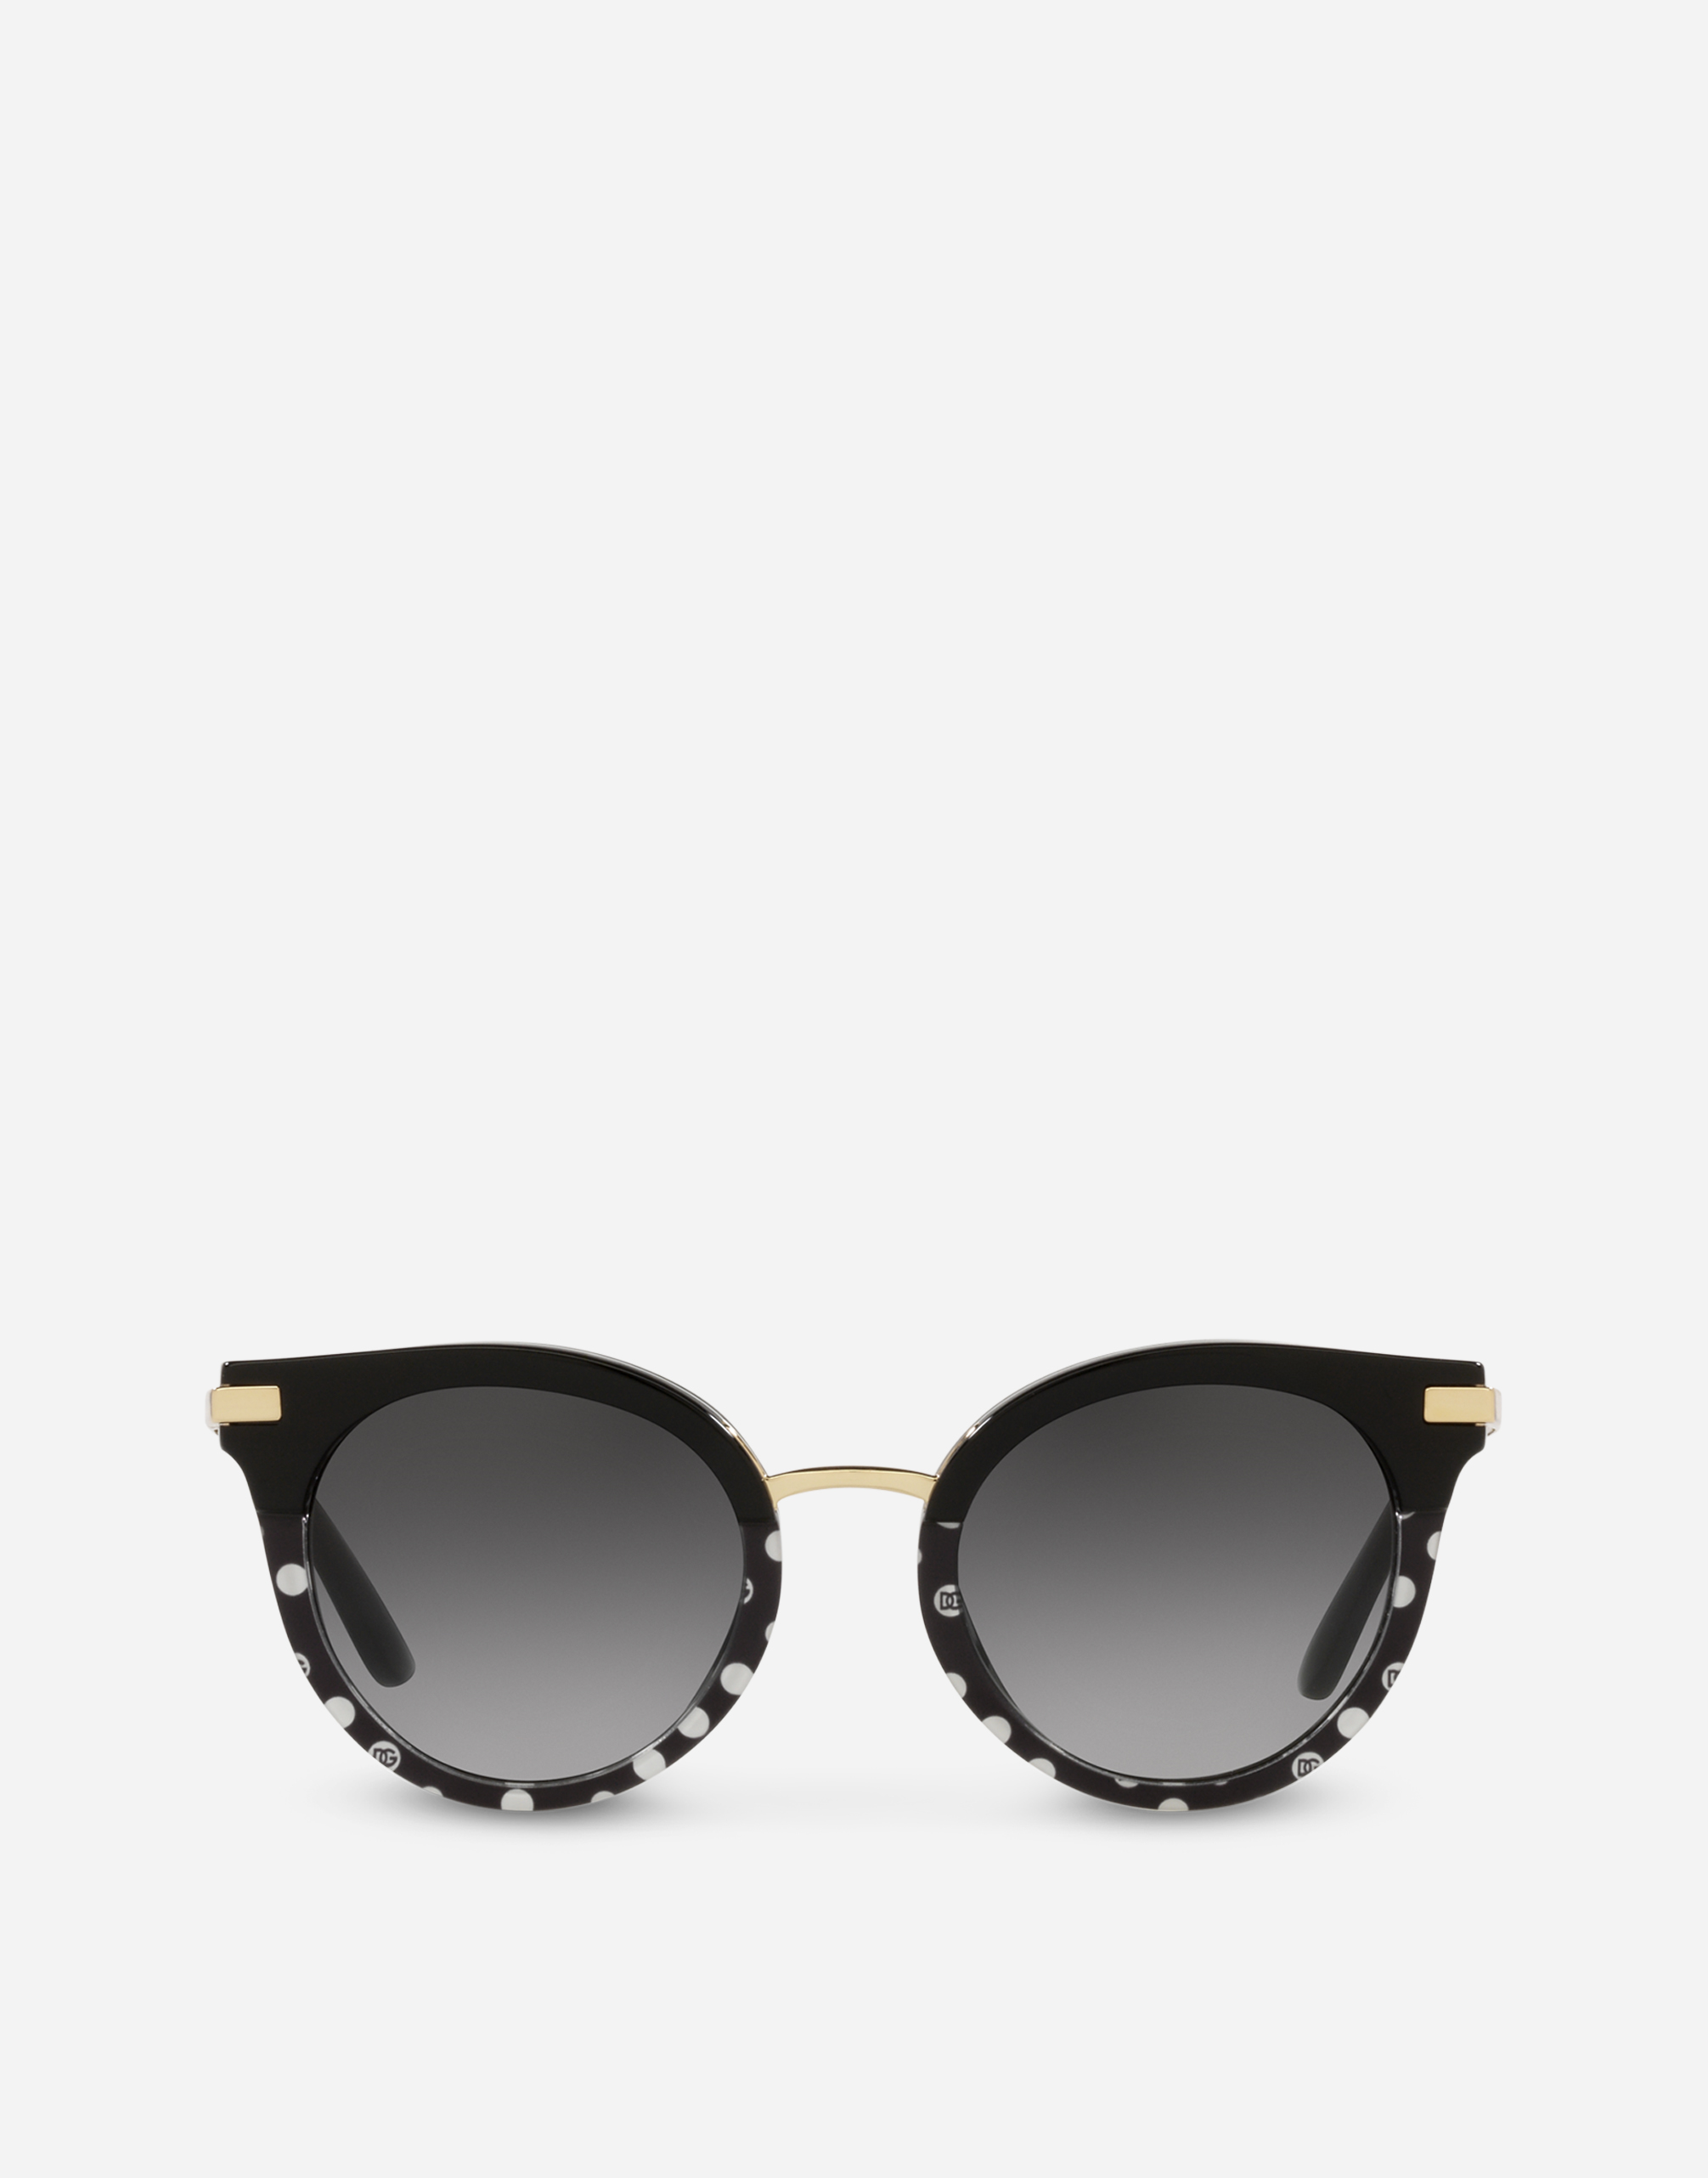 Half print sunglasses in Pois print